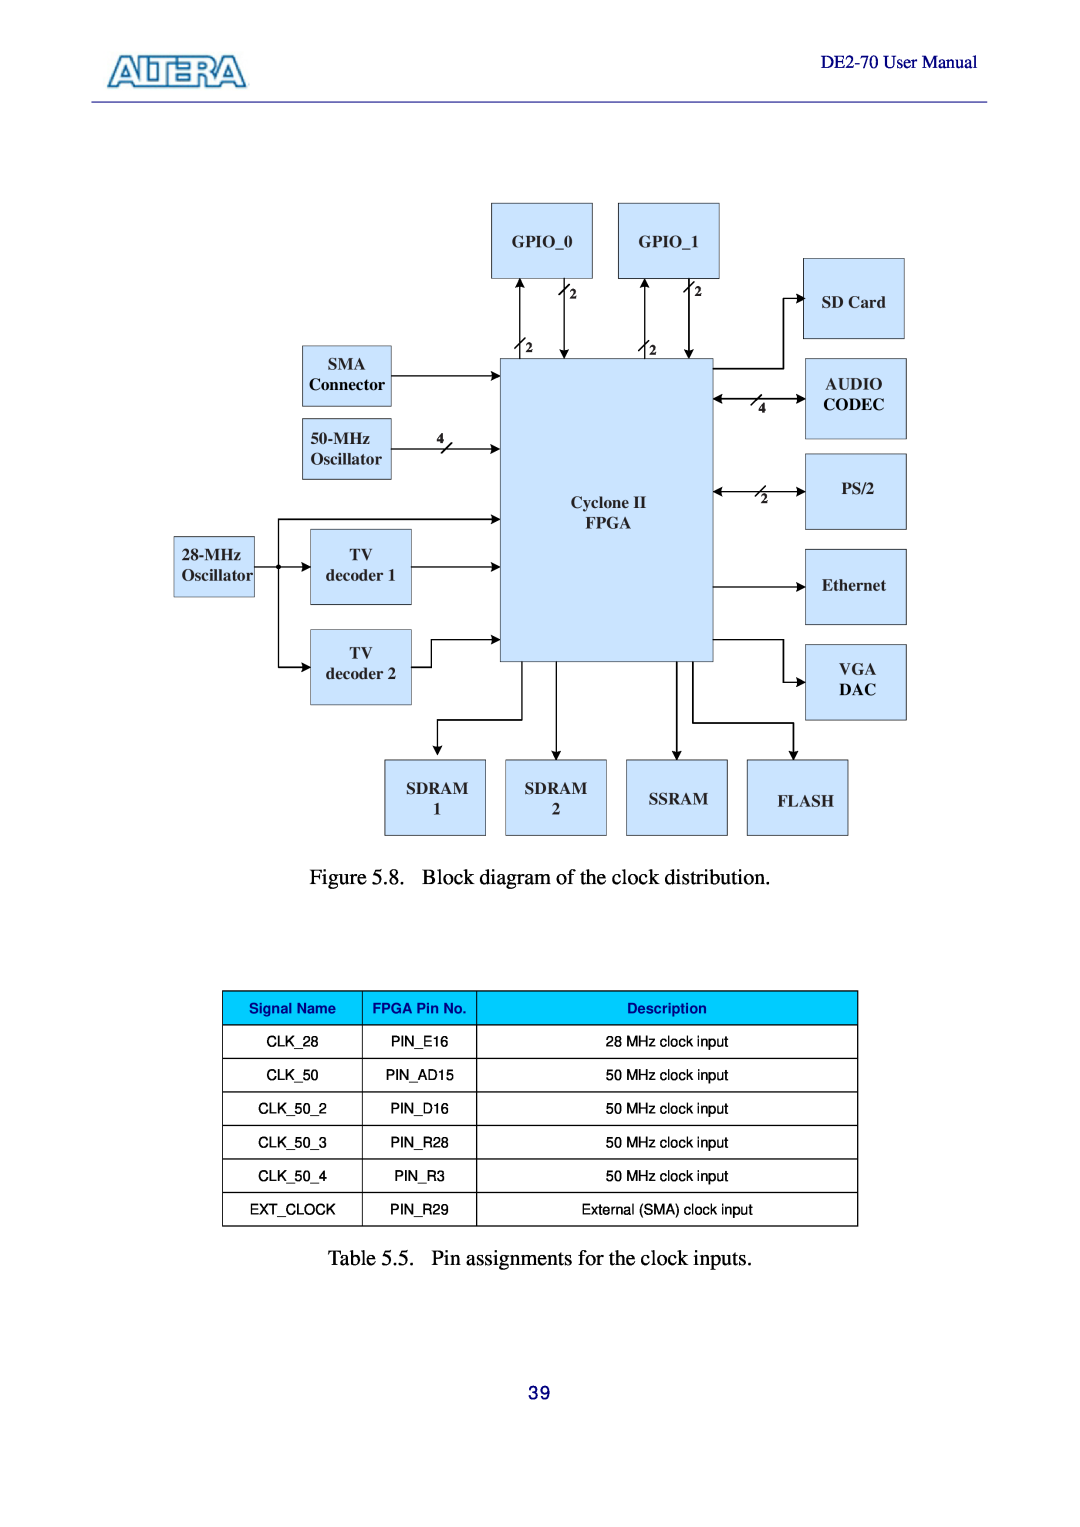 Sigma manual 8. Block diagram of the clock distribution, 5. Pin assignments for the clock inputs, DE2-70 User Manual 